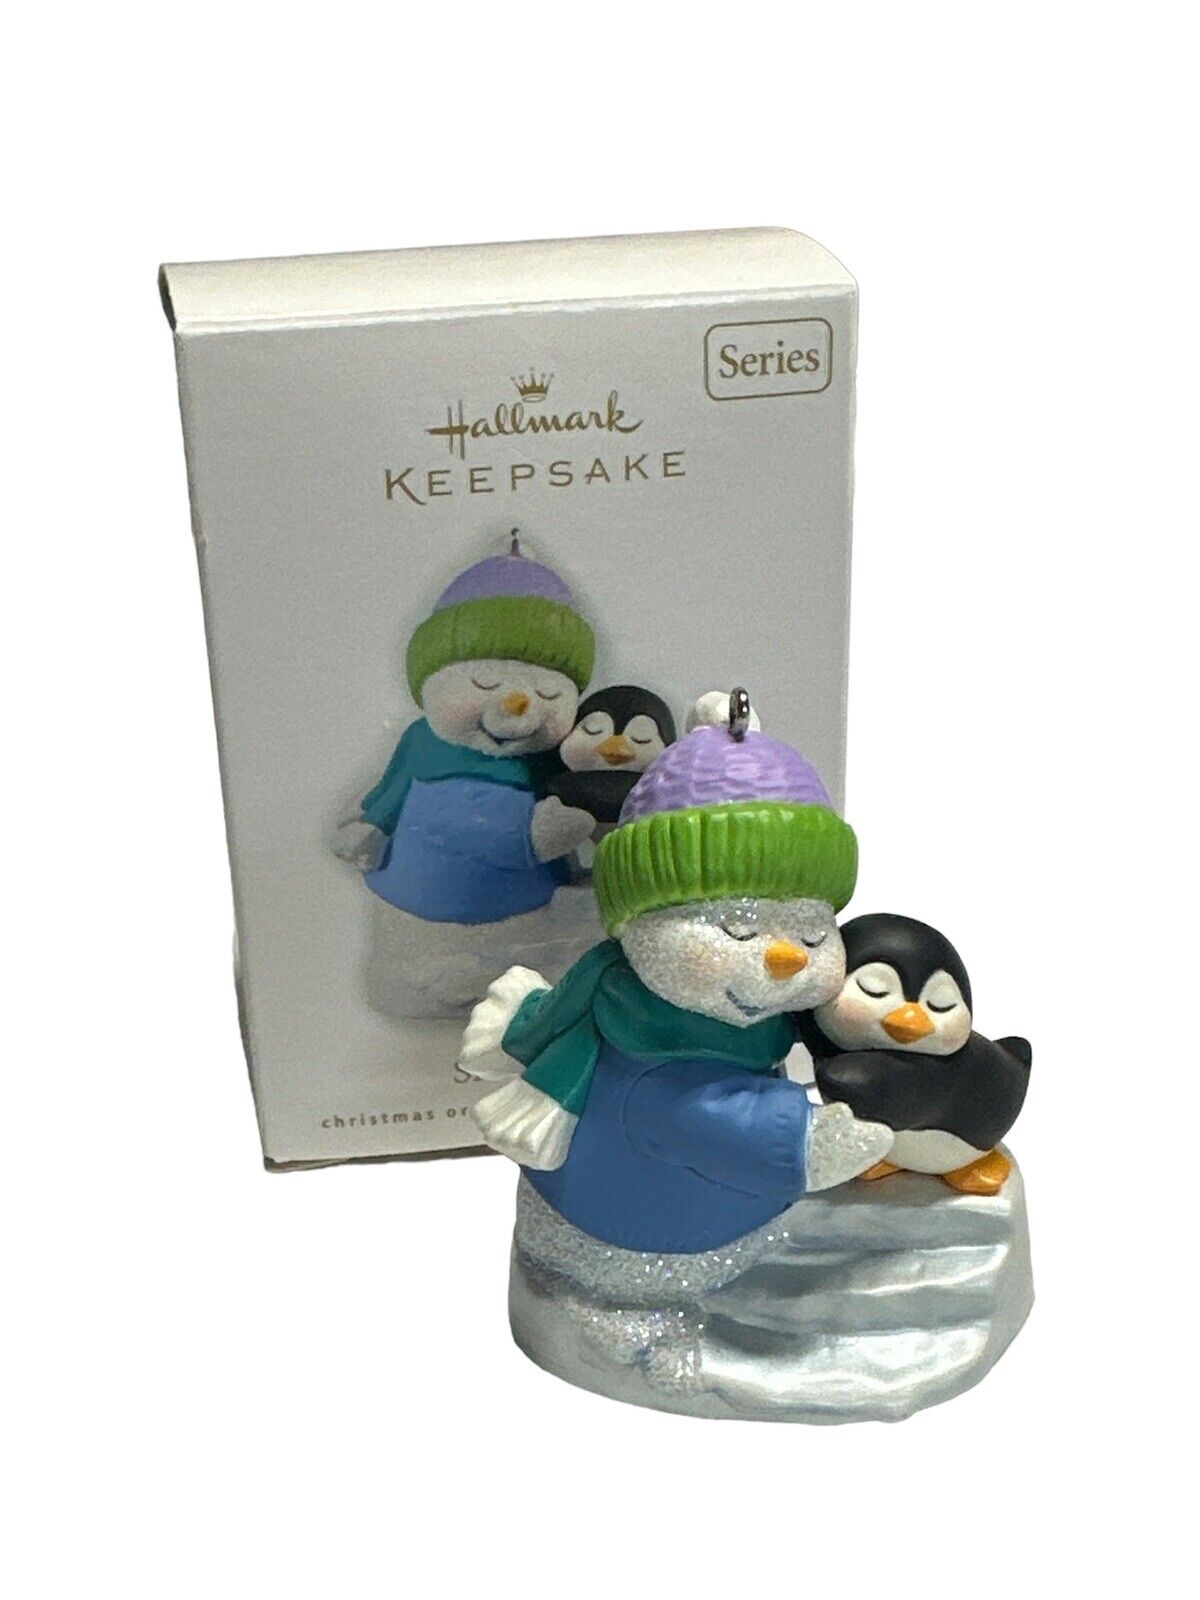 2010 Hallmark Keepsake Christmas Ornament “Snow Buddies” Penguin & Snowman Box 